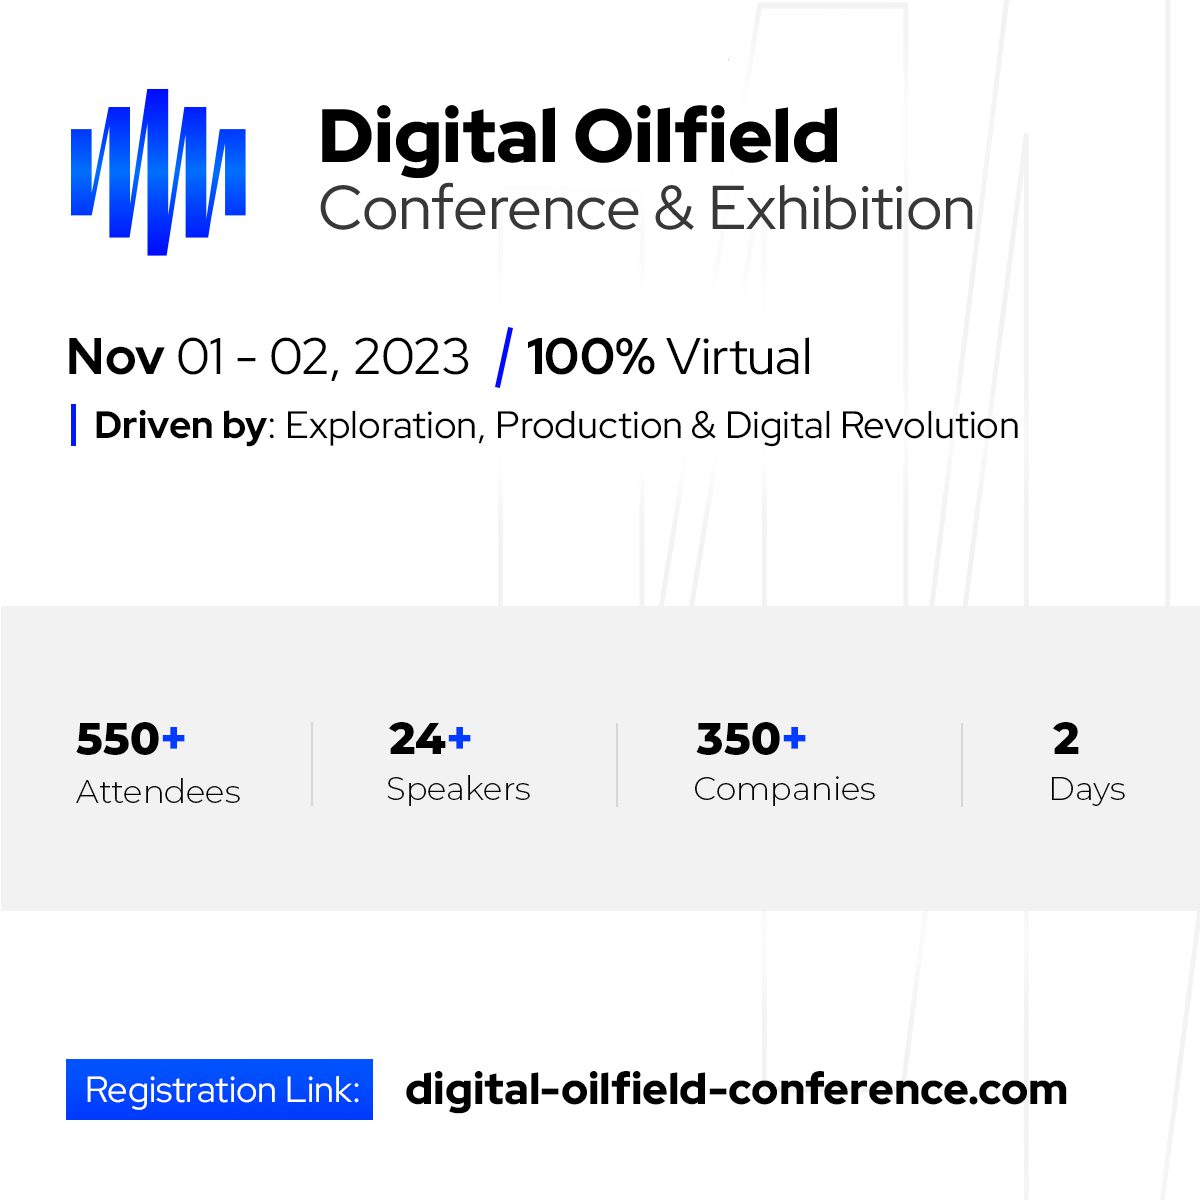 Digital Oilfield Conference 2023